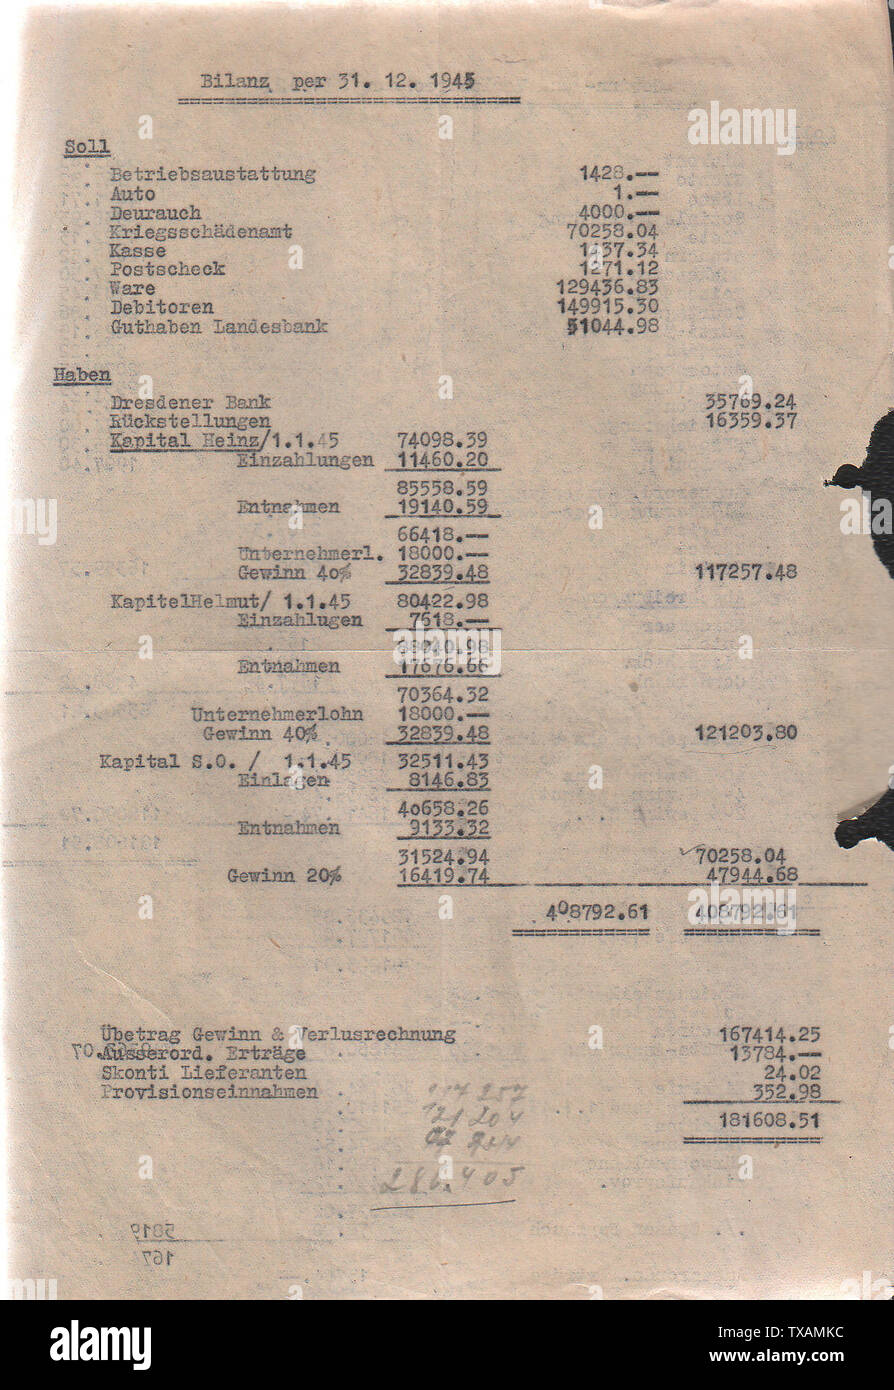 Ohanian Rauchwaren-Kommission, Neuanfang in der Bundesrepublik 1945, GeschÃ¤ftsunterlagen. Bilanz per 31. Dezember 1945.; 31 December 1945; Collection G. & C. Franke; Rifra (talk) 11:00, 26 March 2016 (UTC); Stock Photo